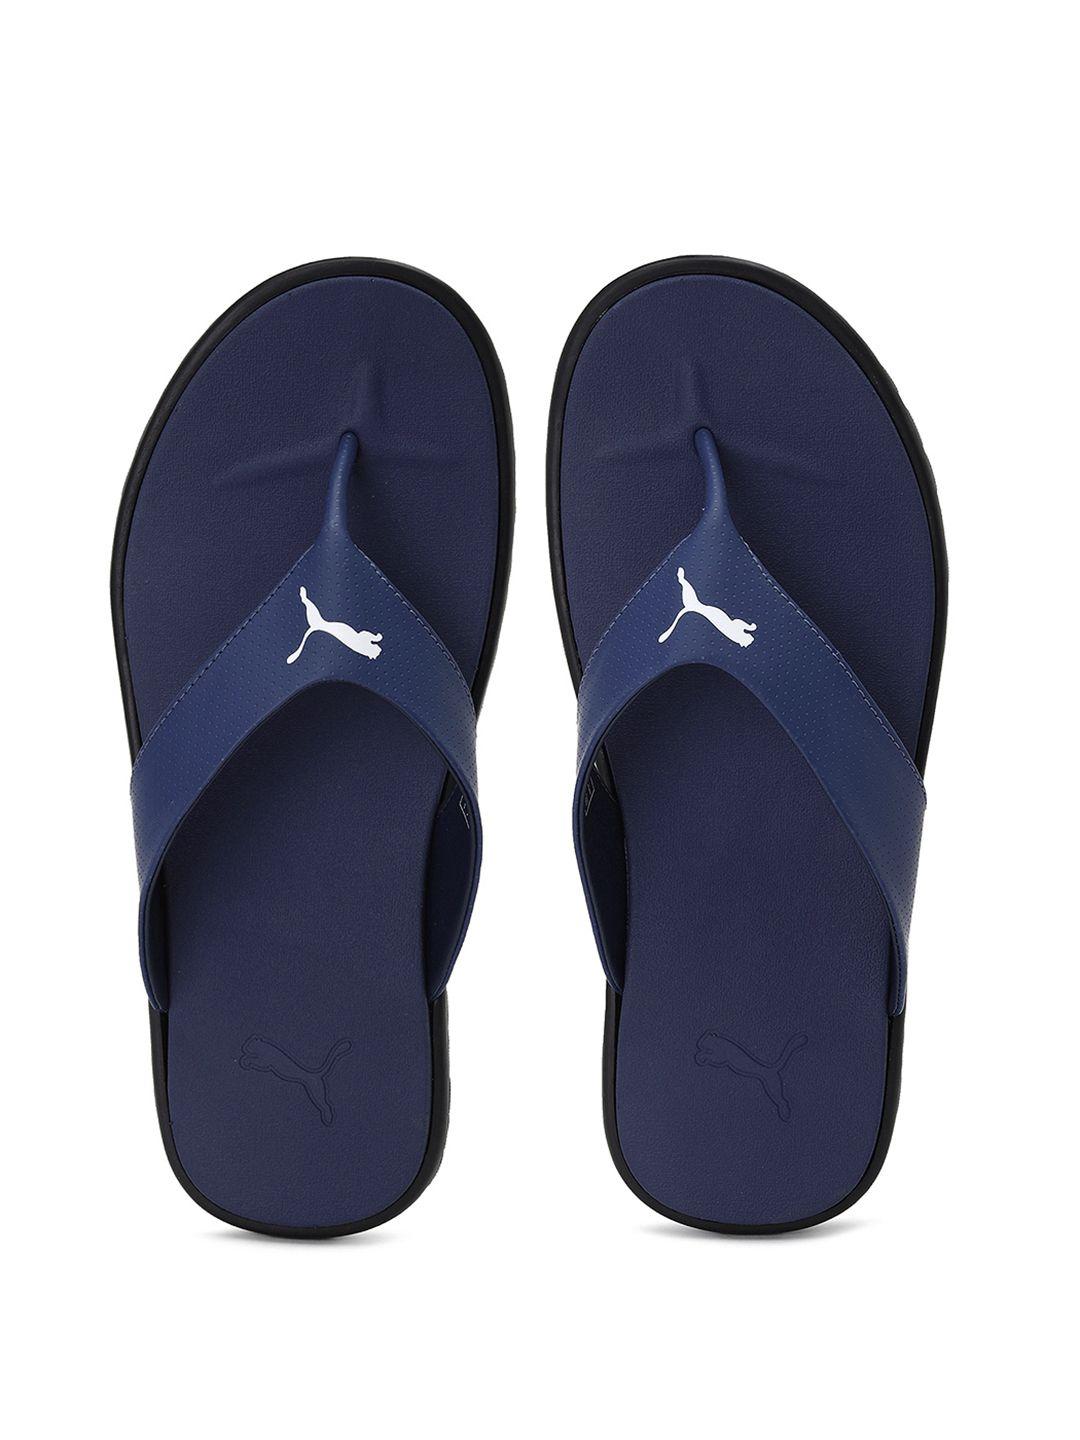 puma unisex blue galaxy comfort sandals